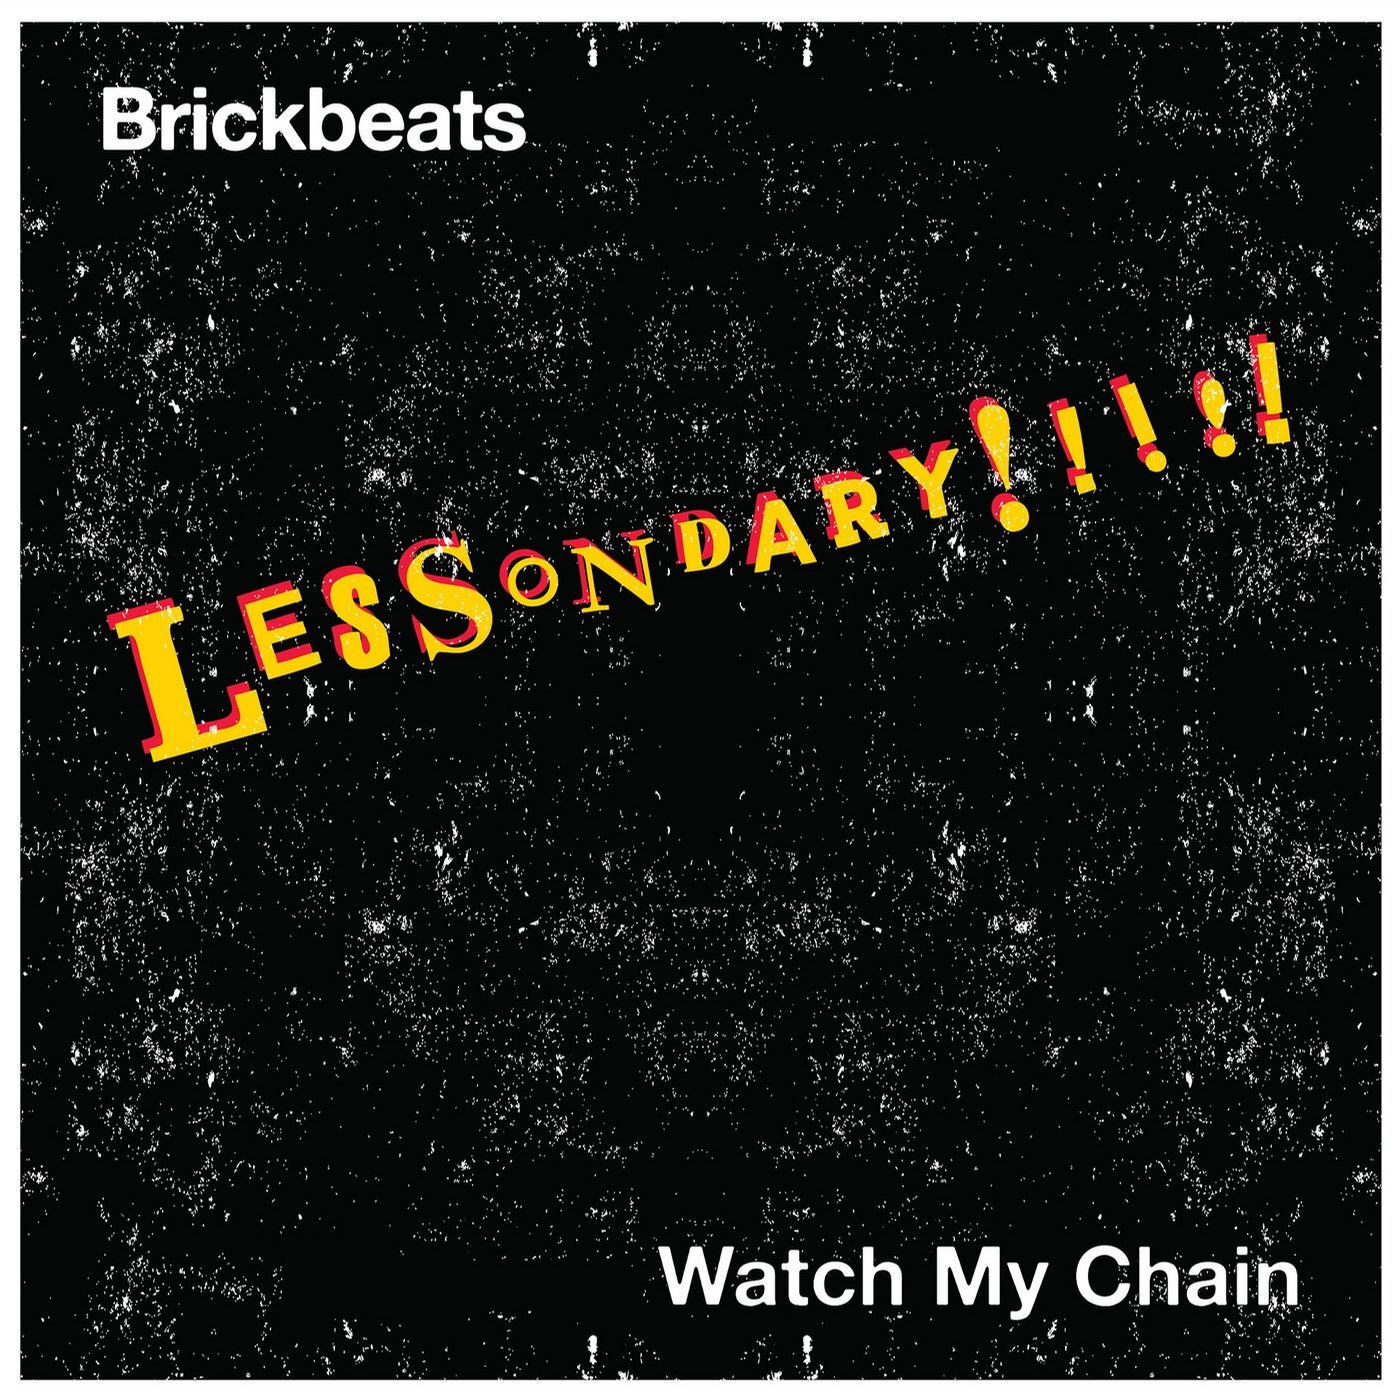 Watch My Chain (feat. Brickbeats)